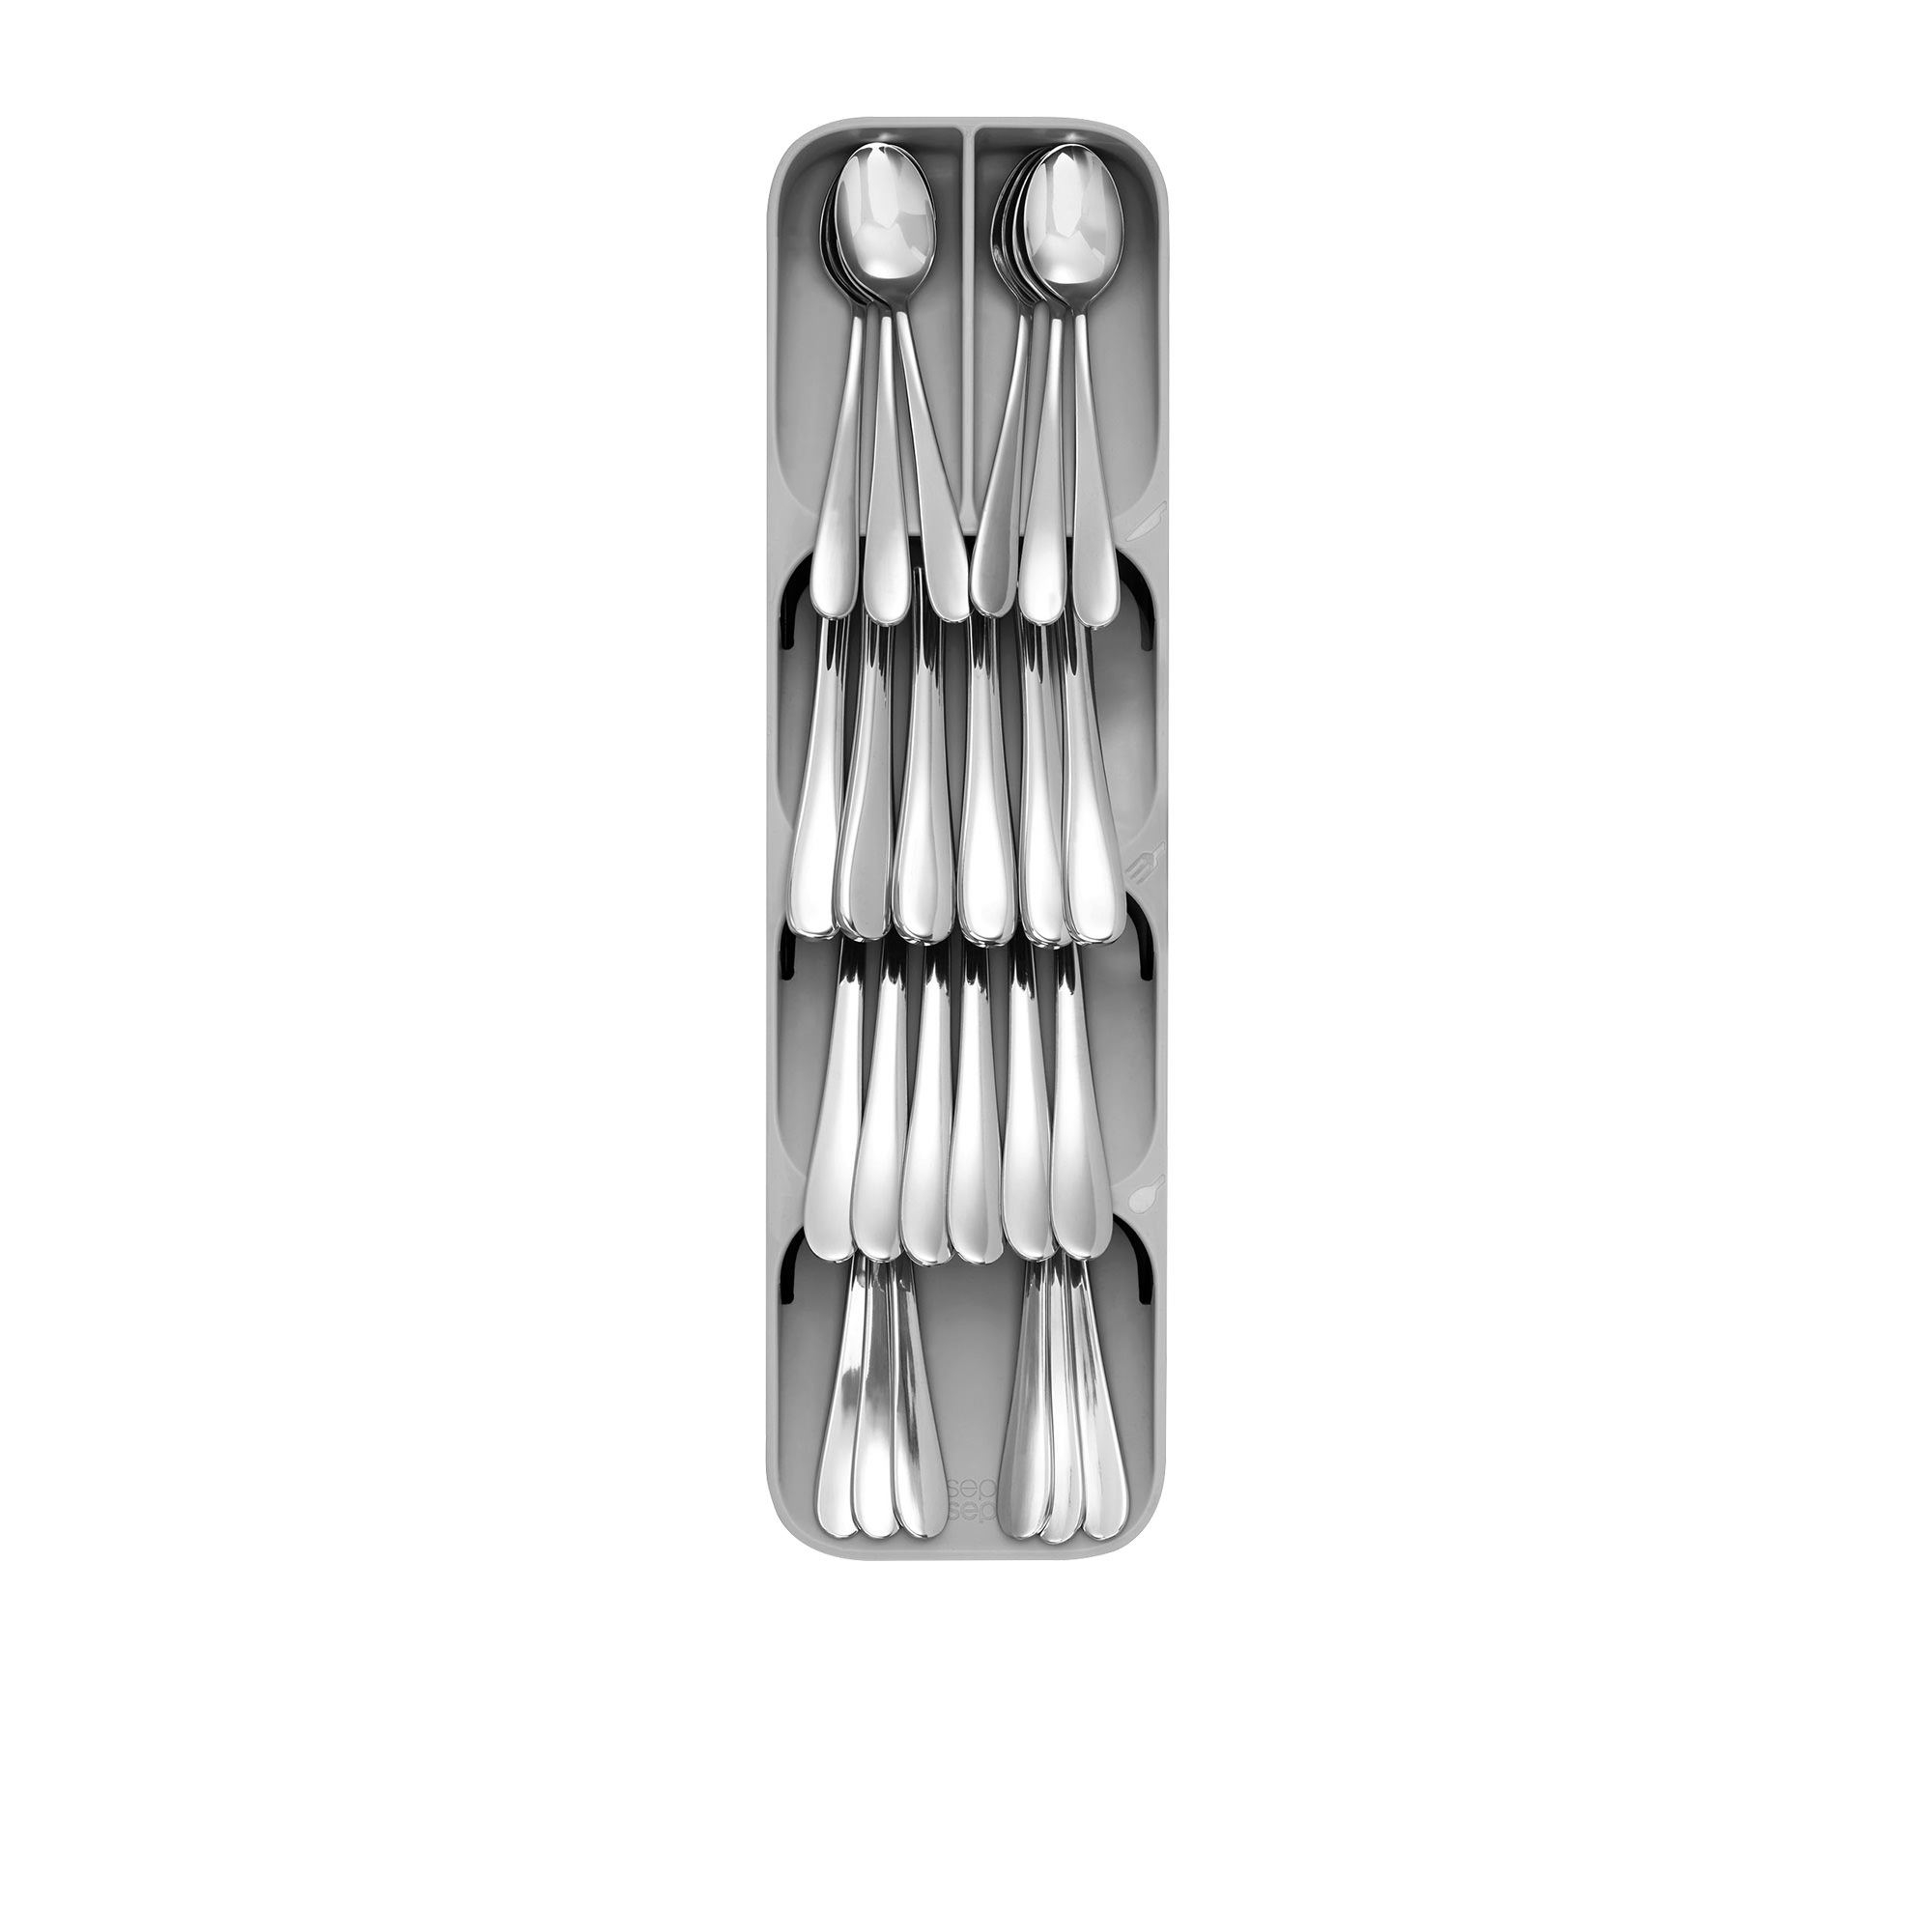 Joseph Joseph DrawerStore Compact Cutlery Organiser Image 1